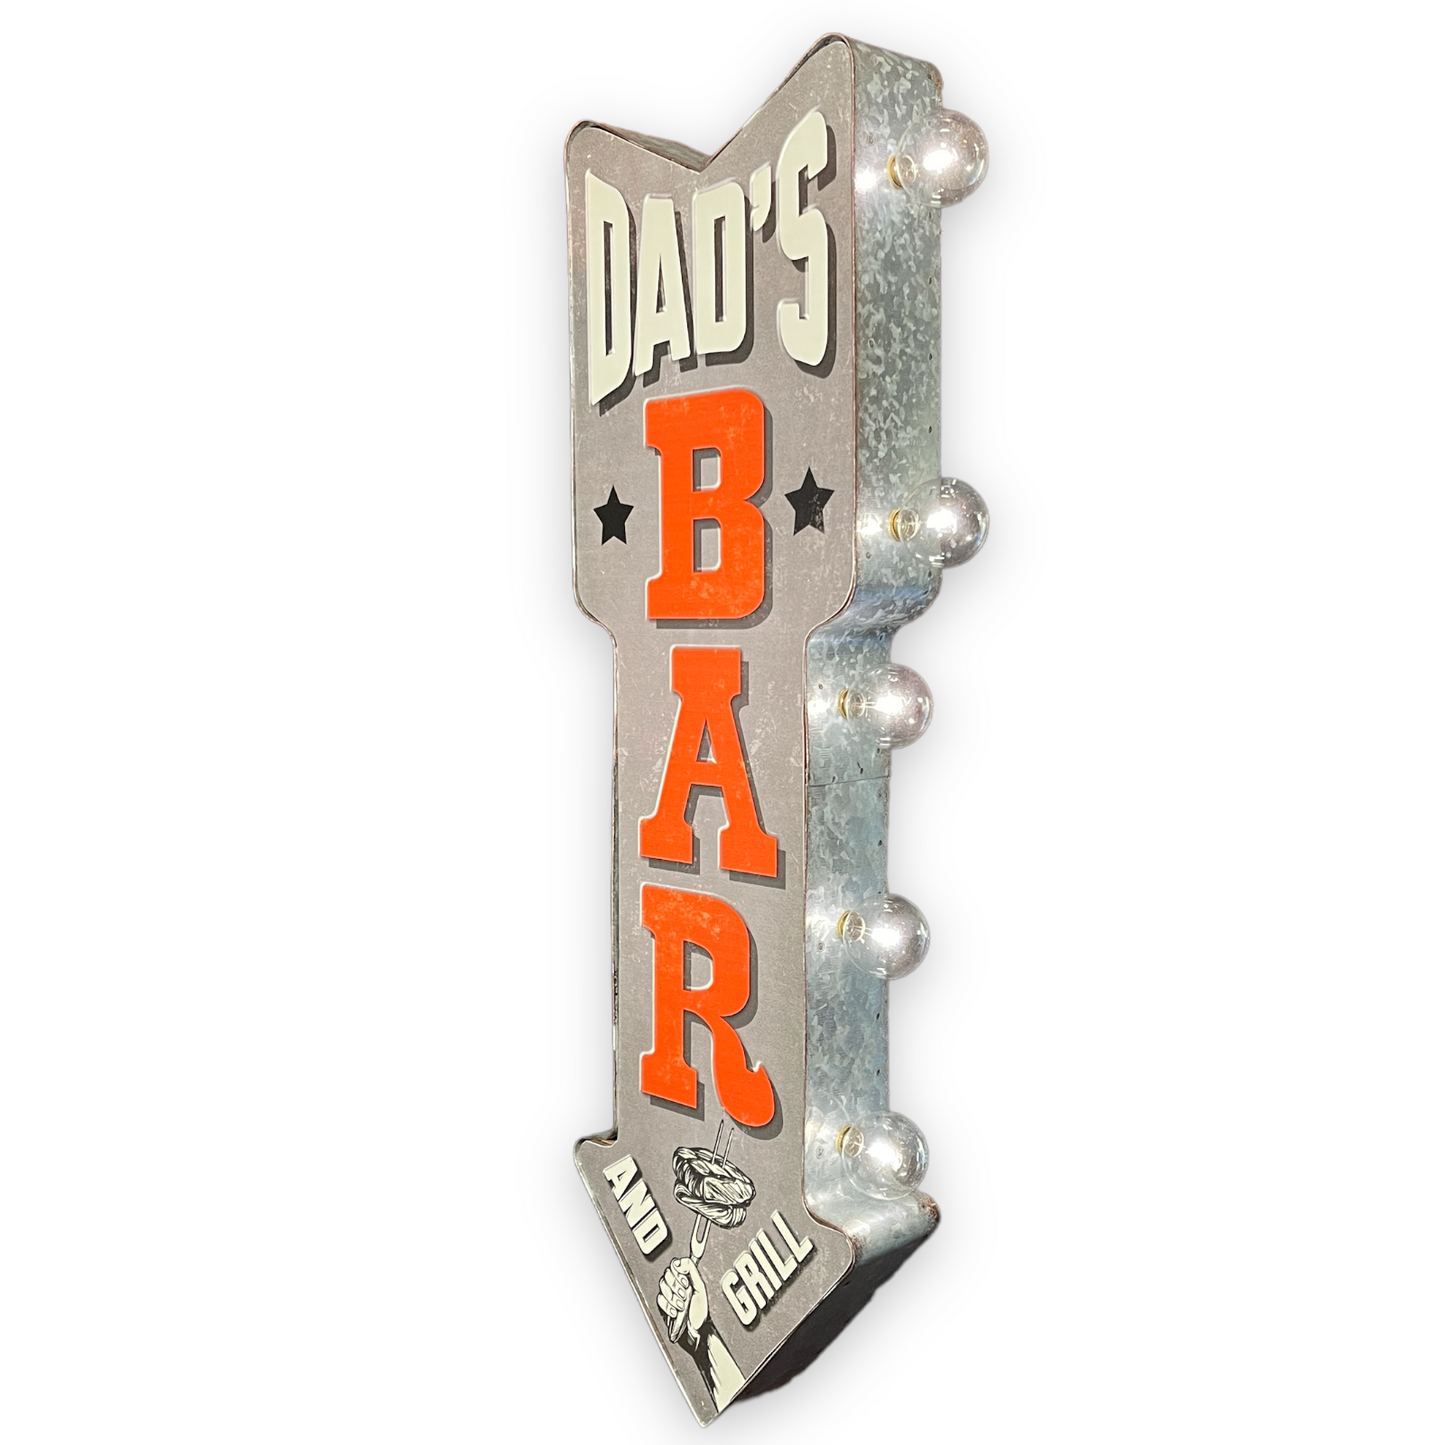 Dad's Bar LED Arrow Sign